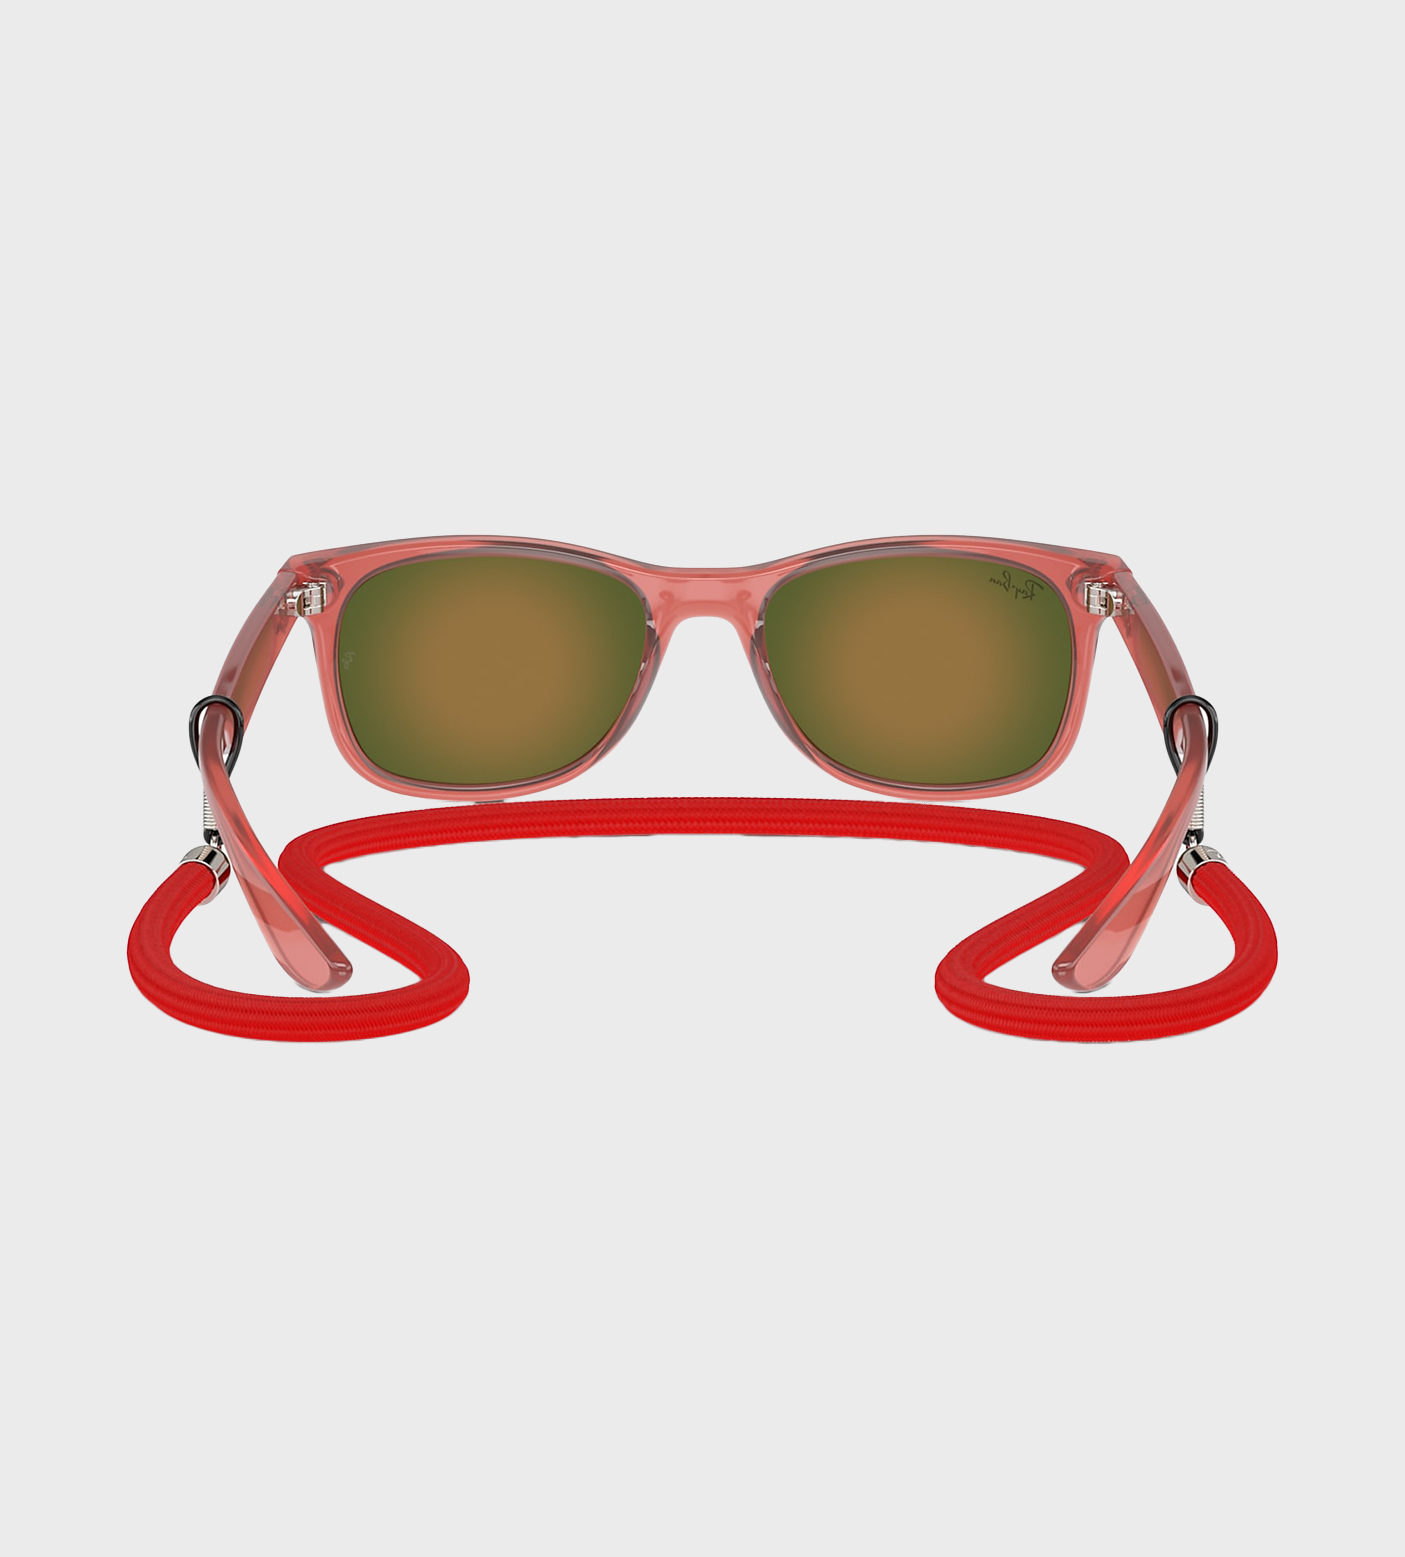 New Wayfarer Sunglasses Pink